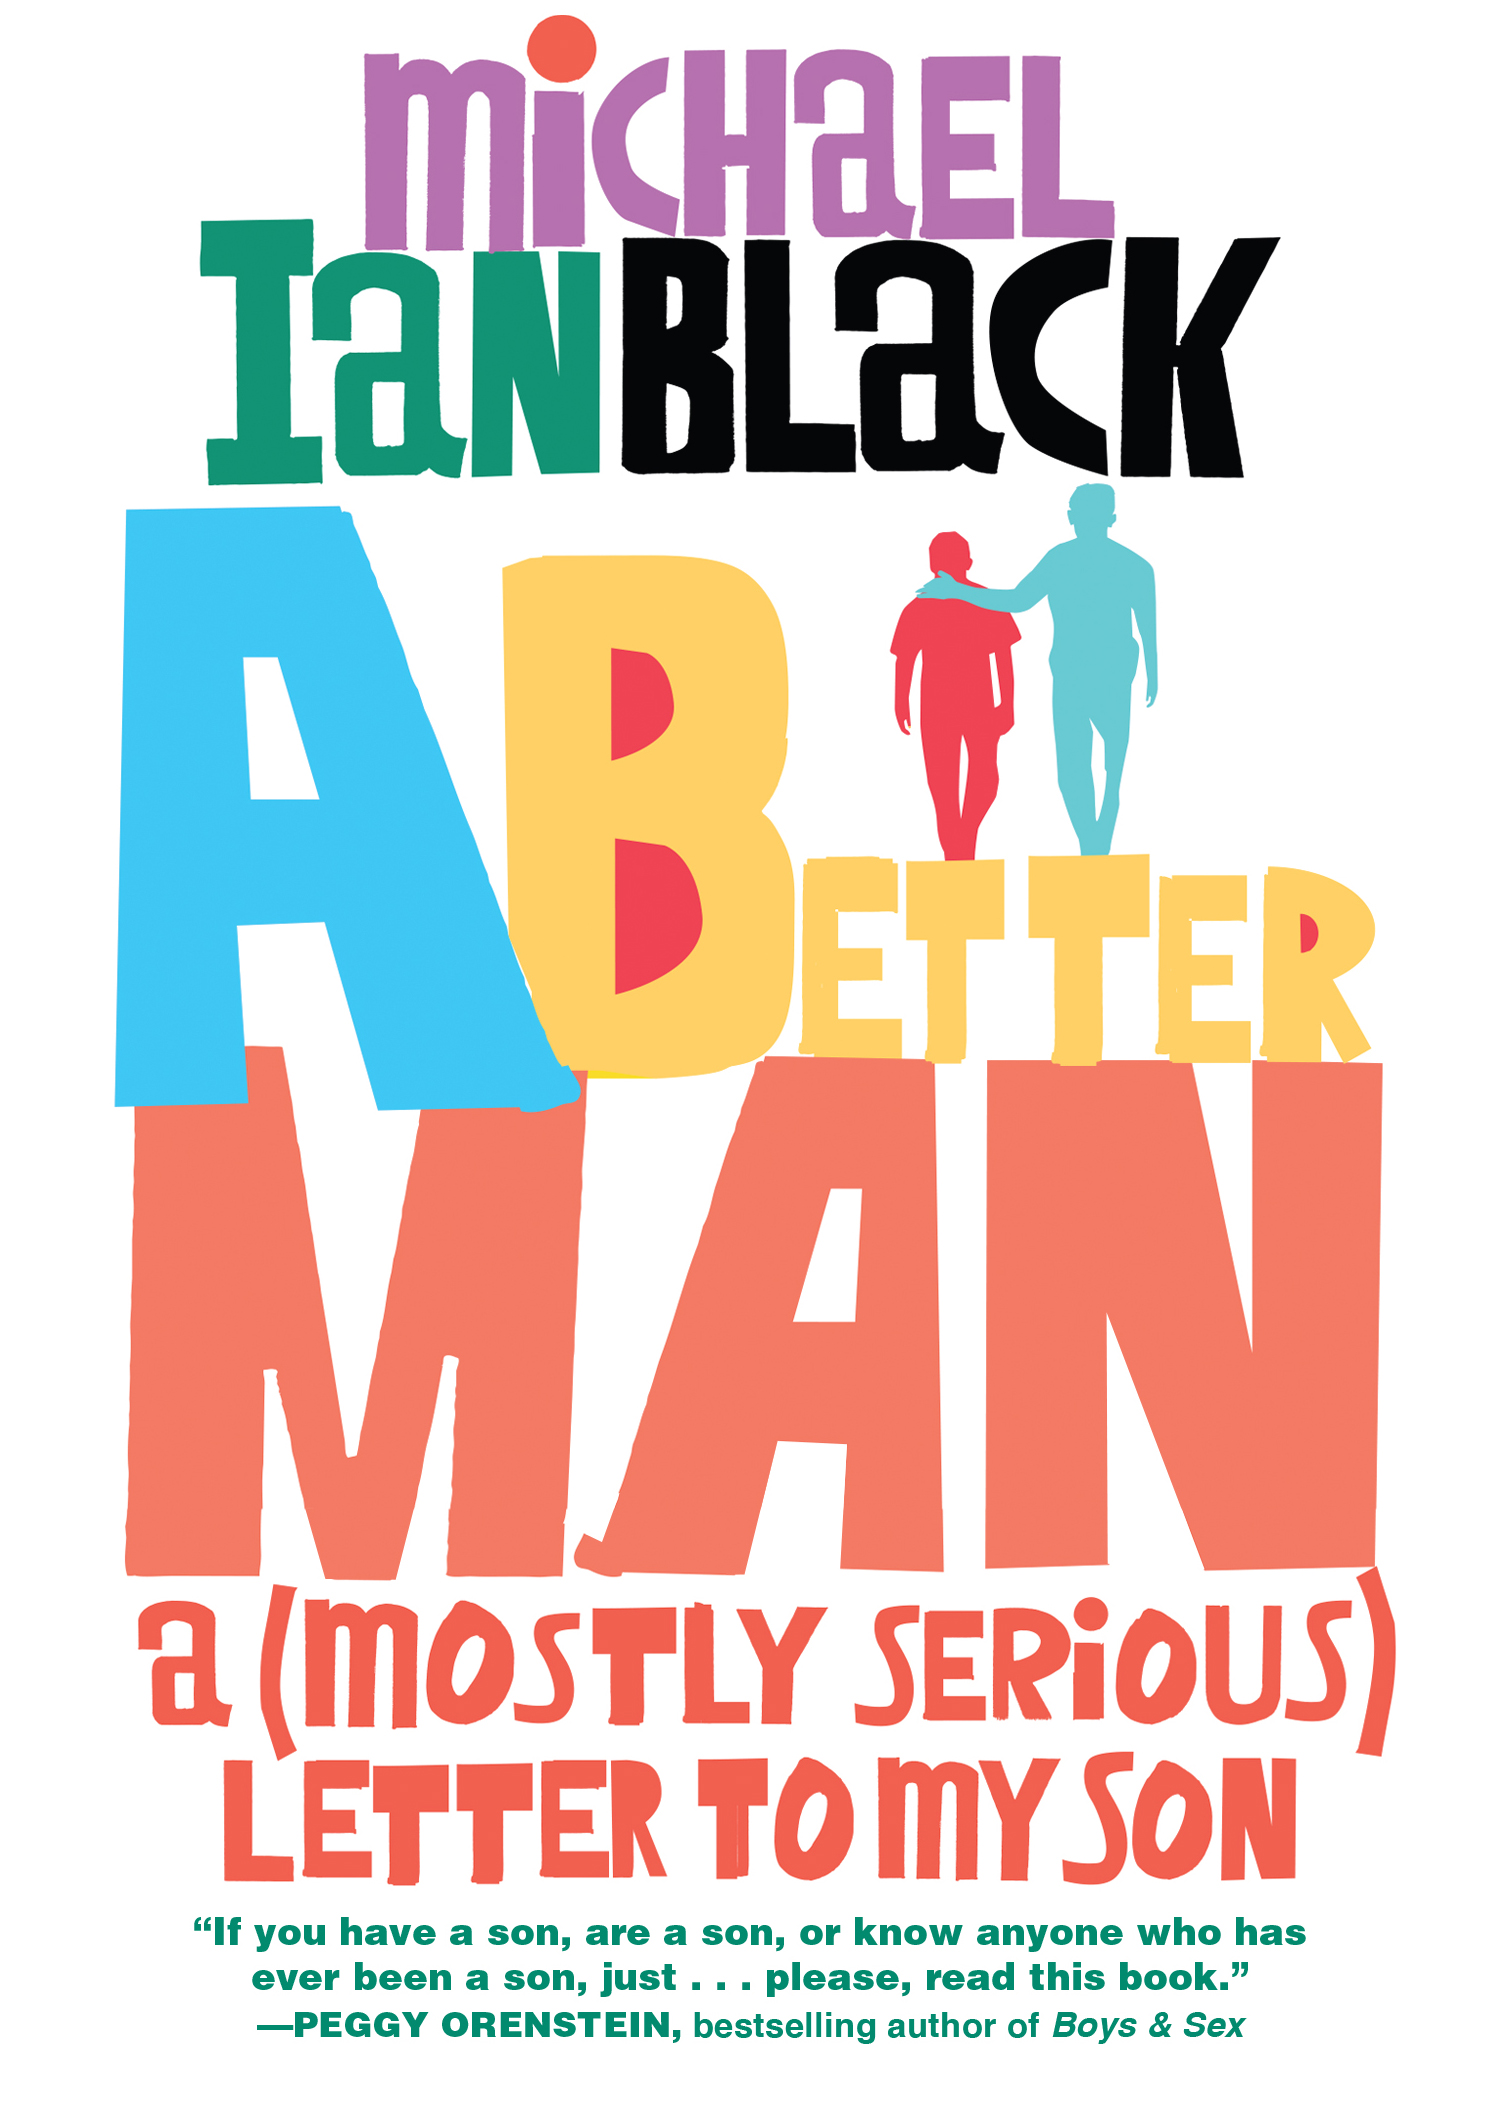 A Better Man by Michael Ian Black Hachette Book Group pic